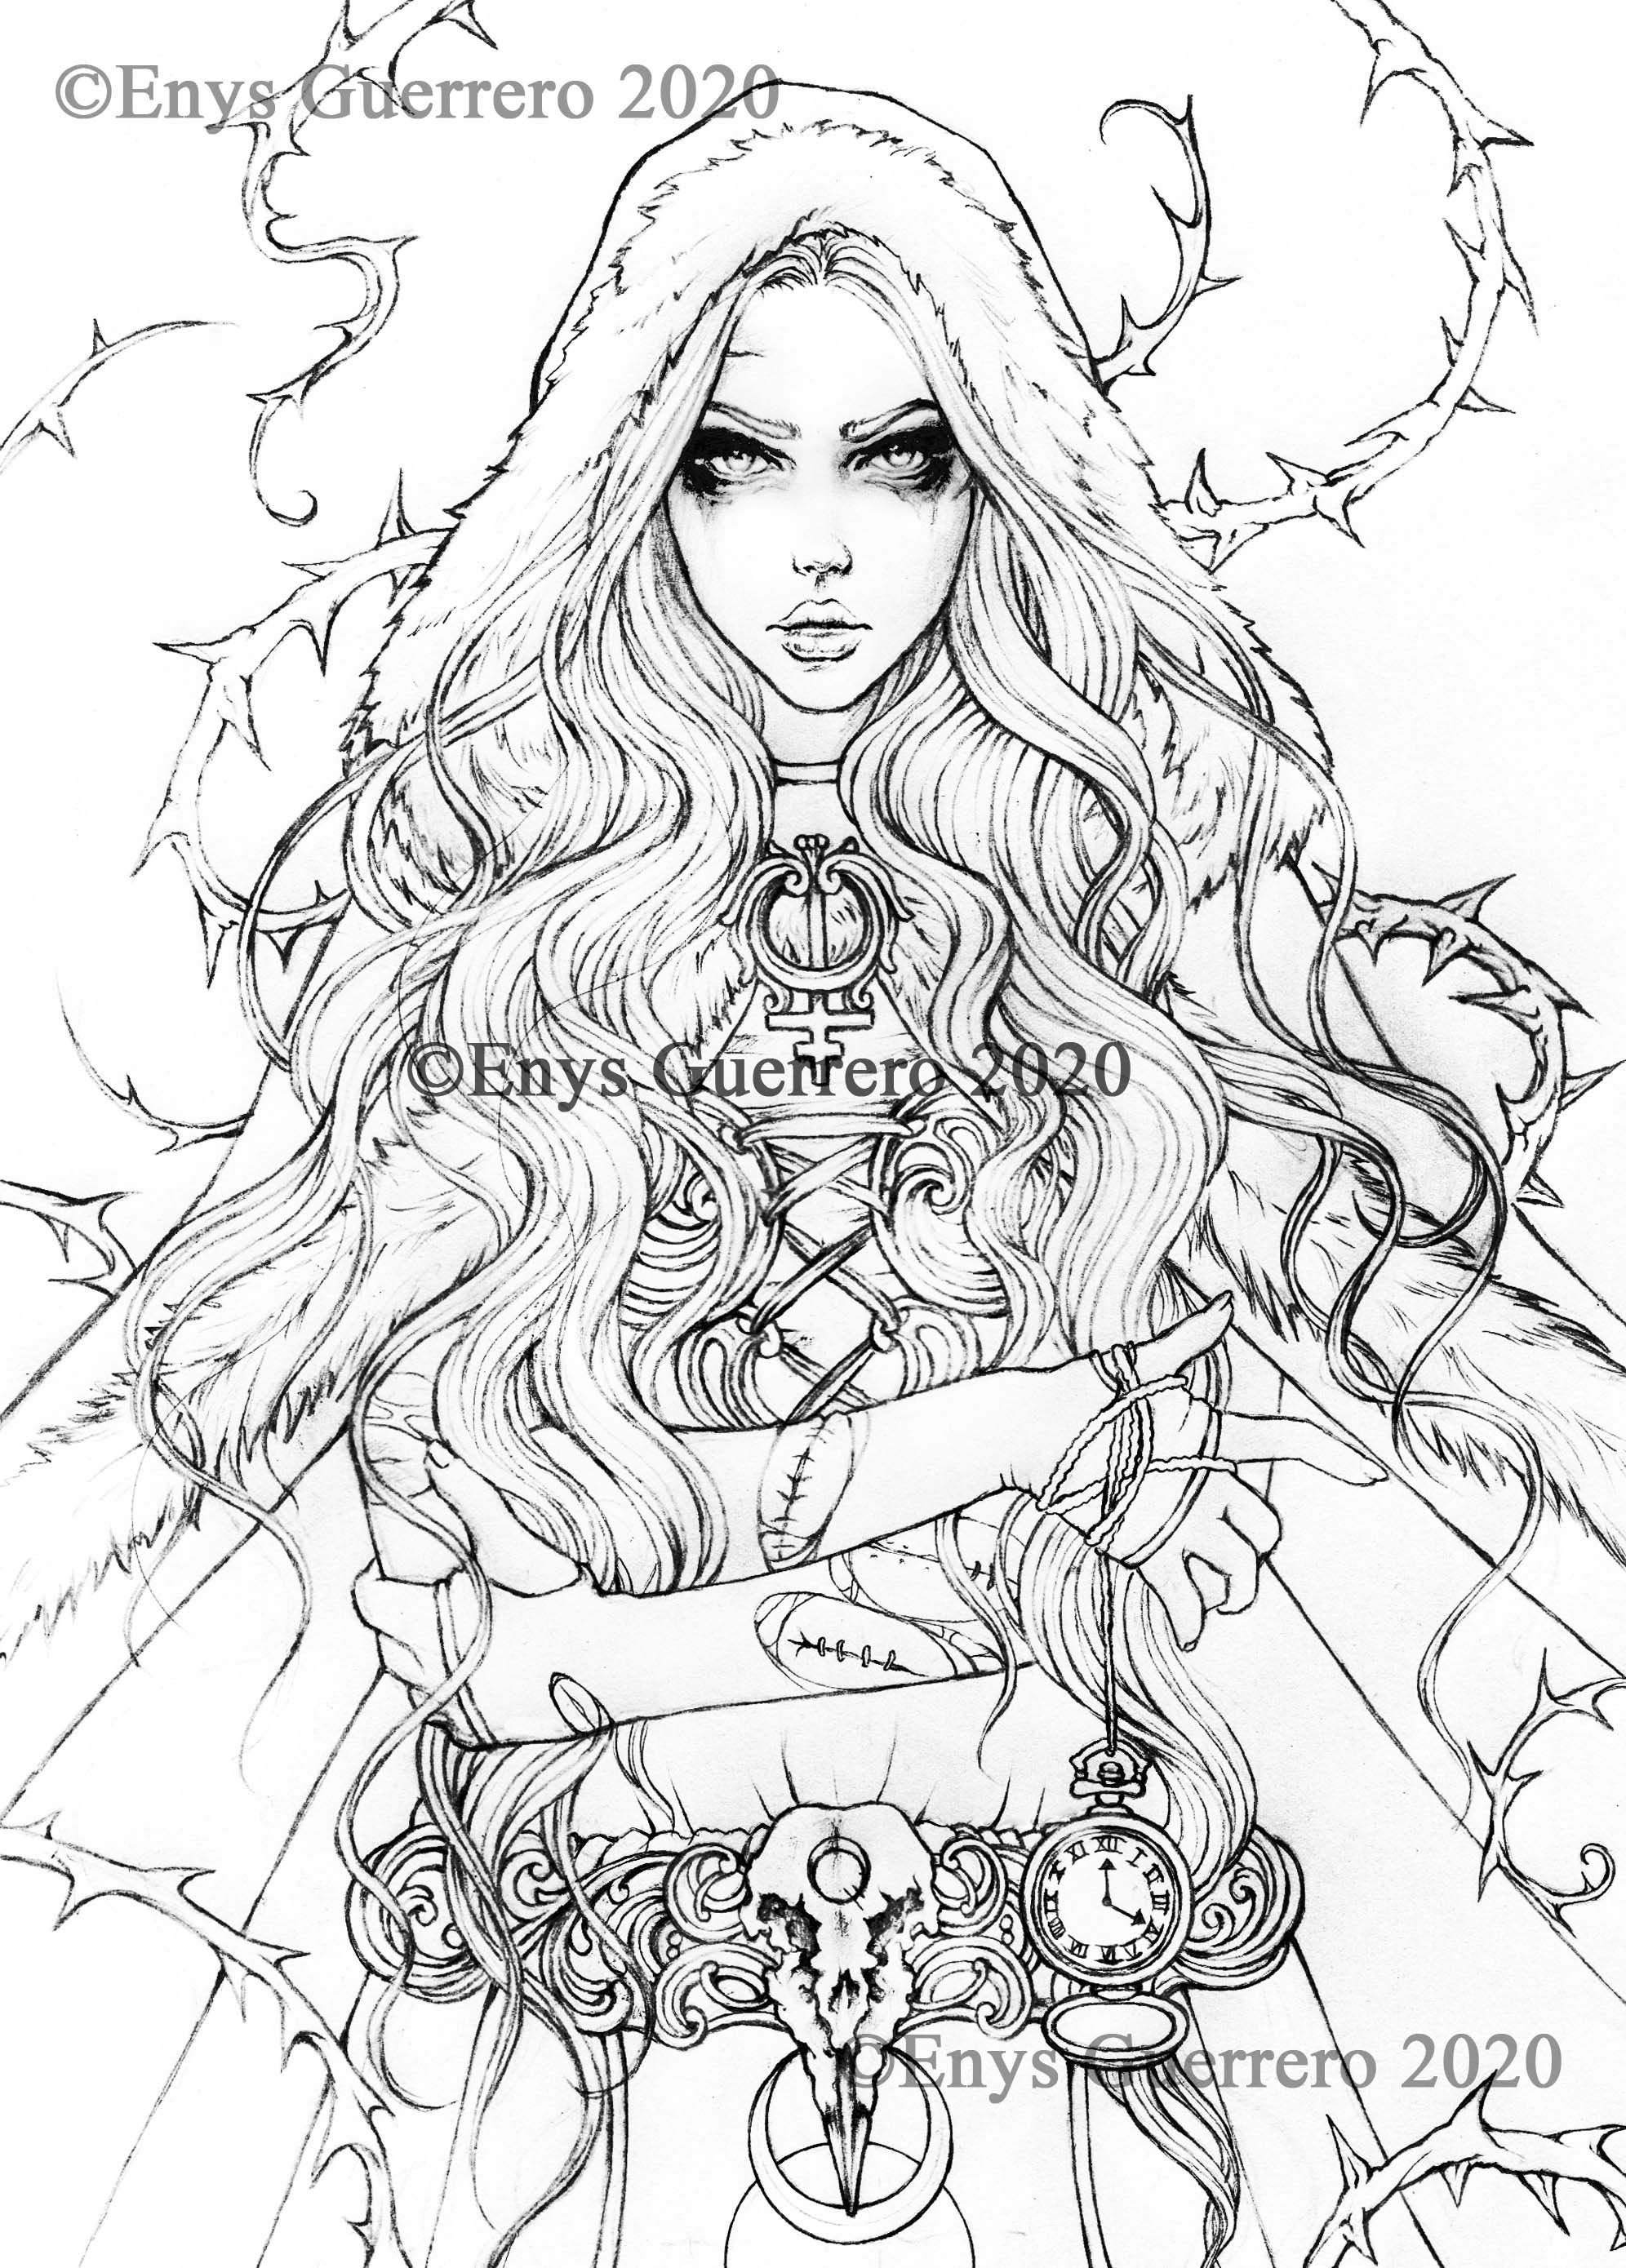 Reila coloring page goth fantasy printable download jpg by enys guerrero